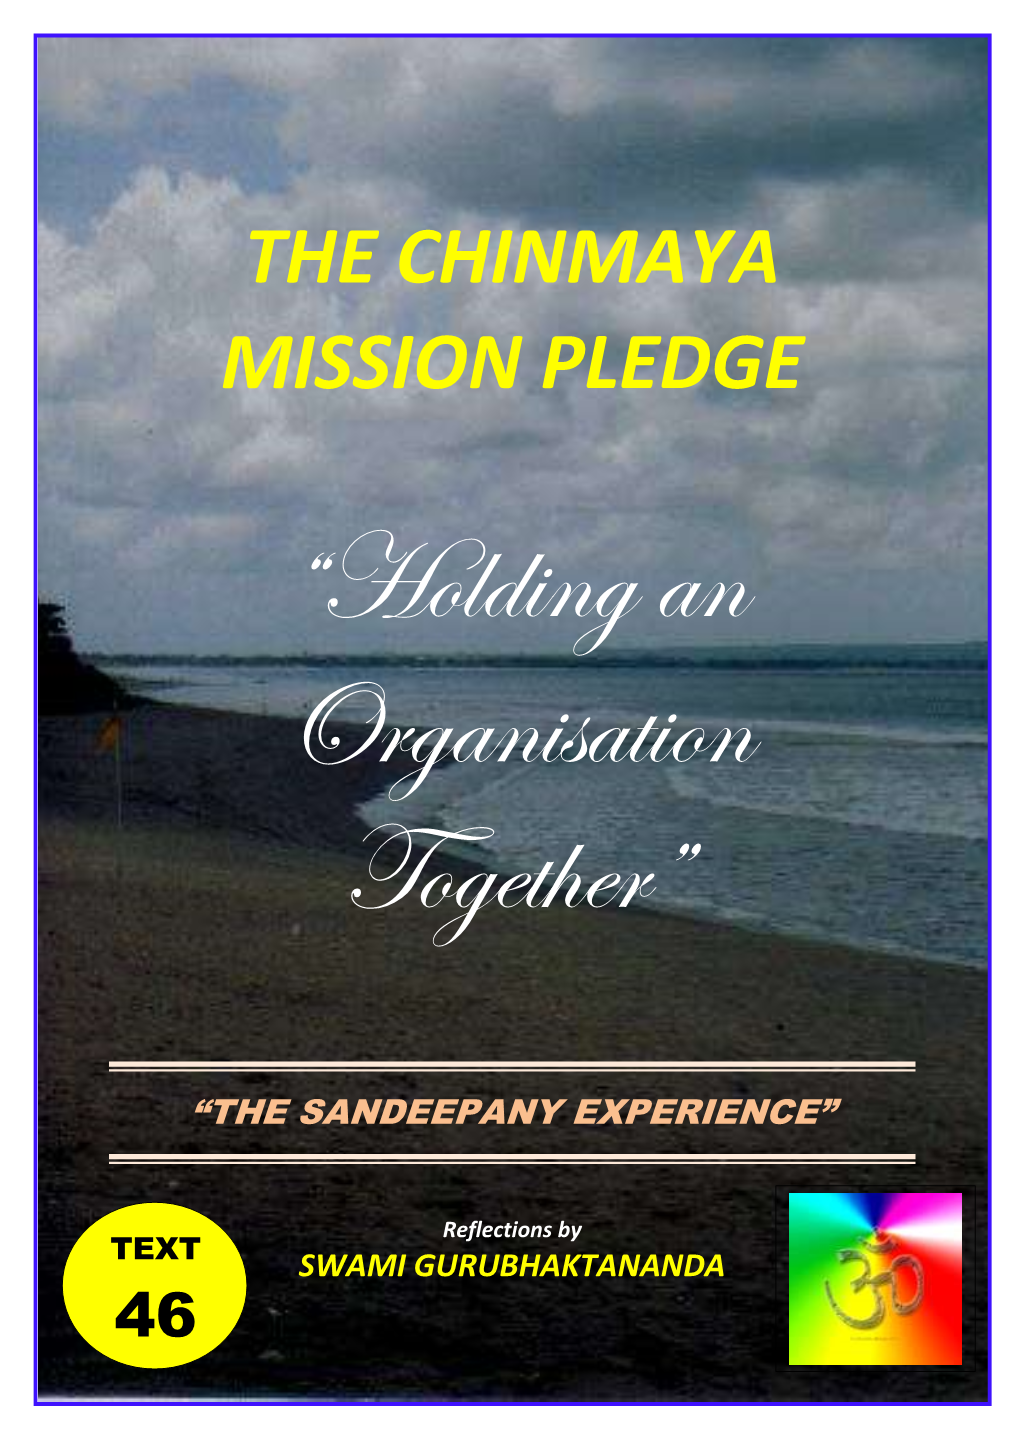 The Chinmaya Mission Pledge